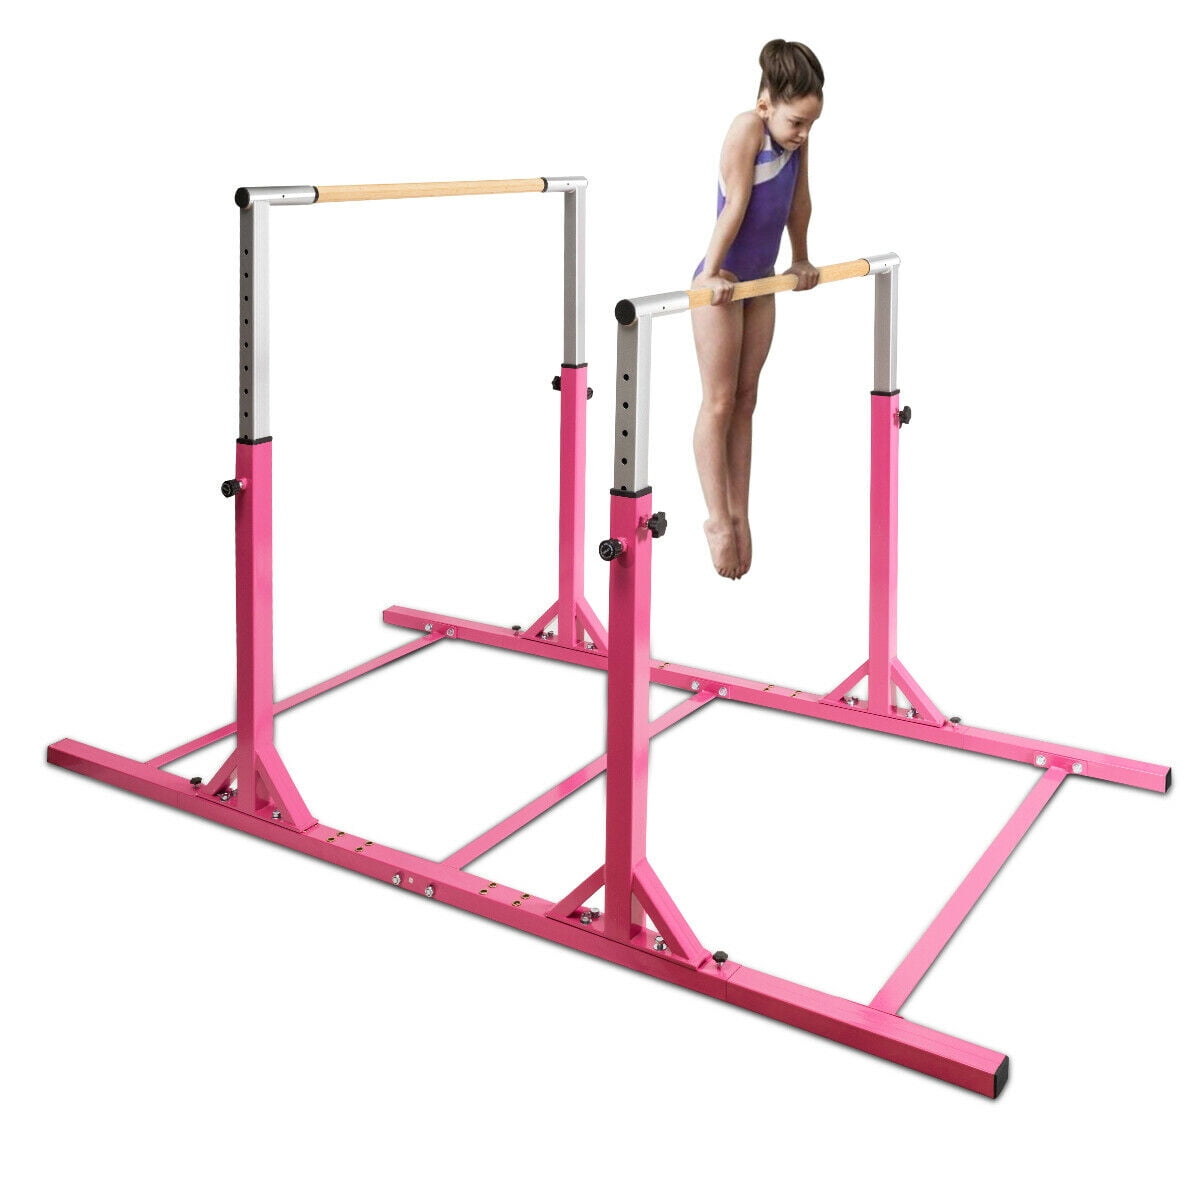 Kids Gymnastics Parallel Bars Double Horizontal Bars Adjustable Width & Height 